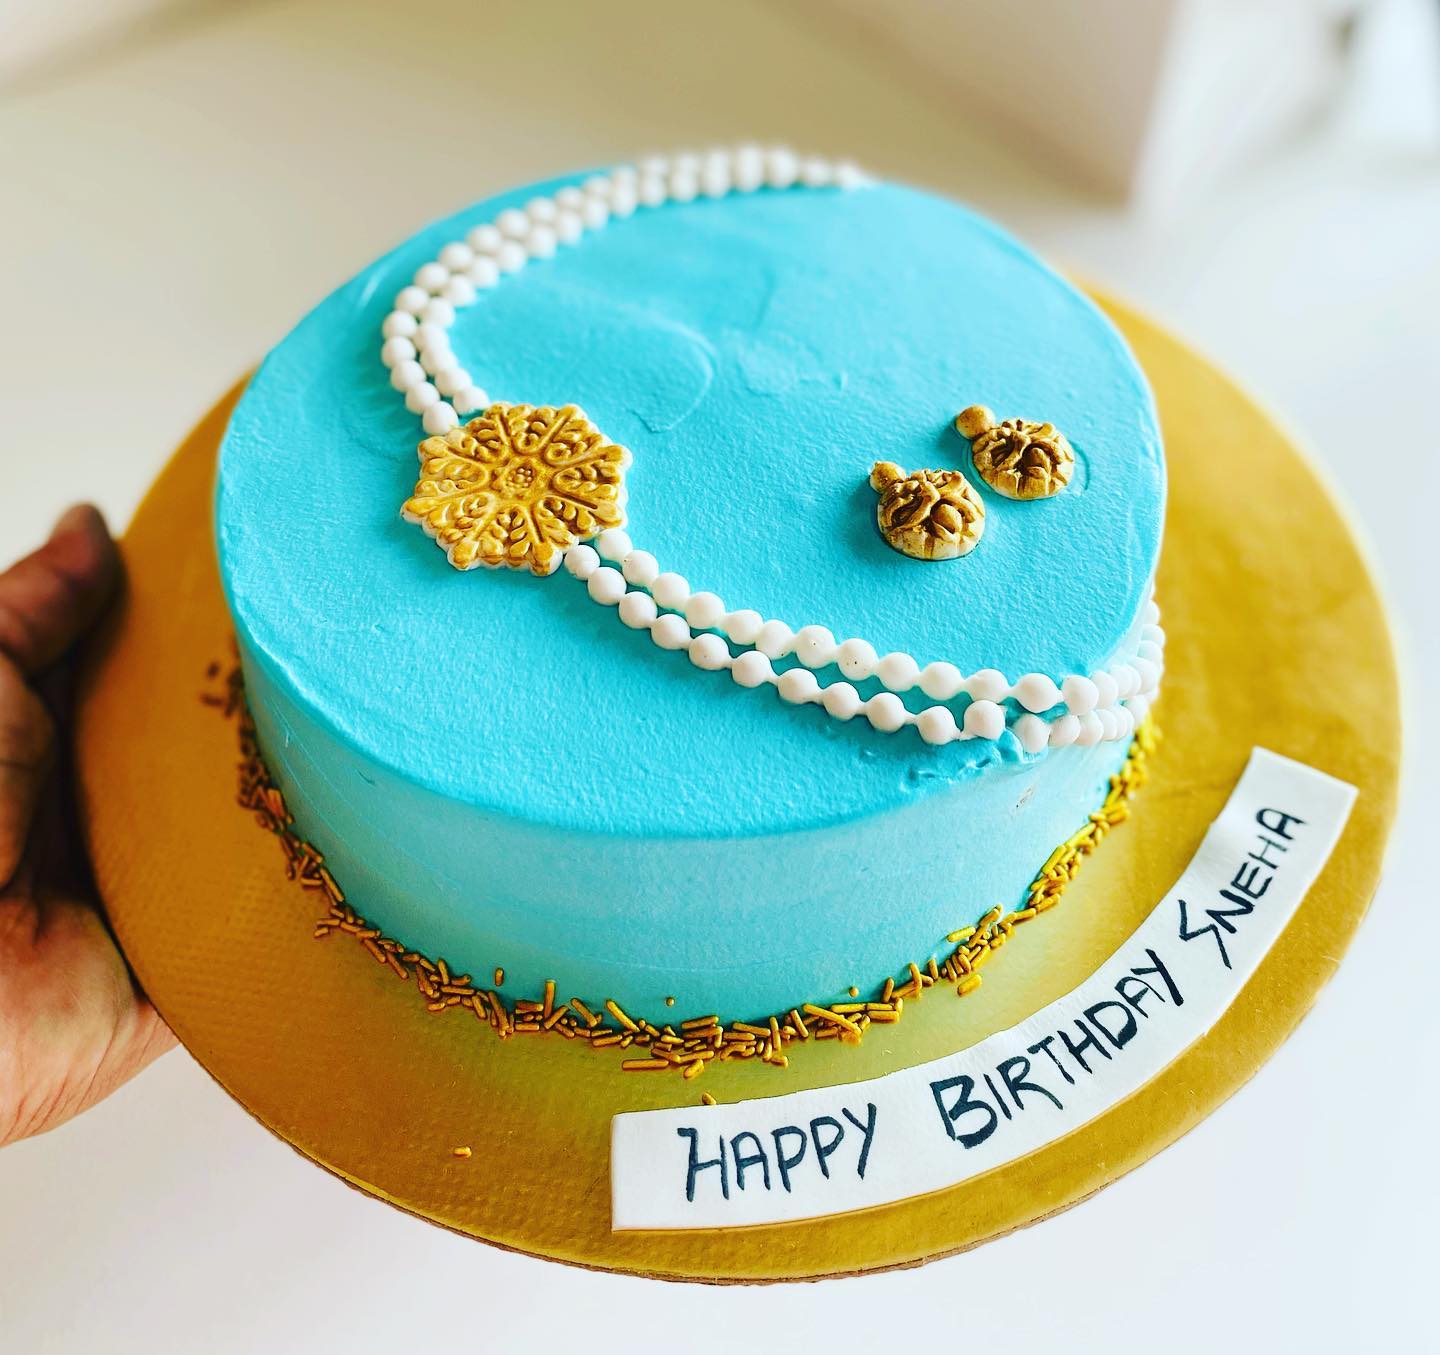 For the love of pearl jewellery 💕

#cake #cakedecorating #sugarart #cakedecor #designing #jewellery ##jewellerycake #food #foodart #birthdaycake #bengaluru